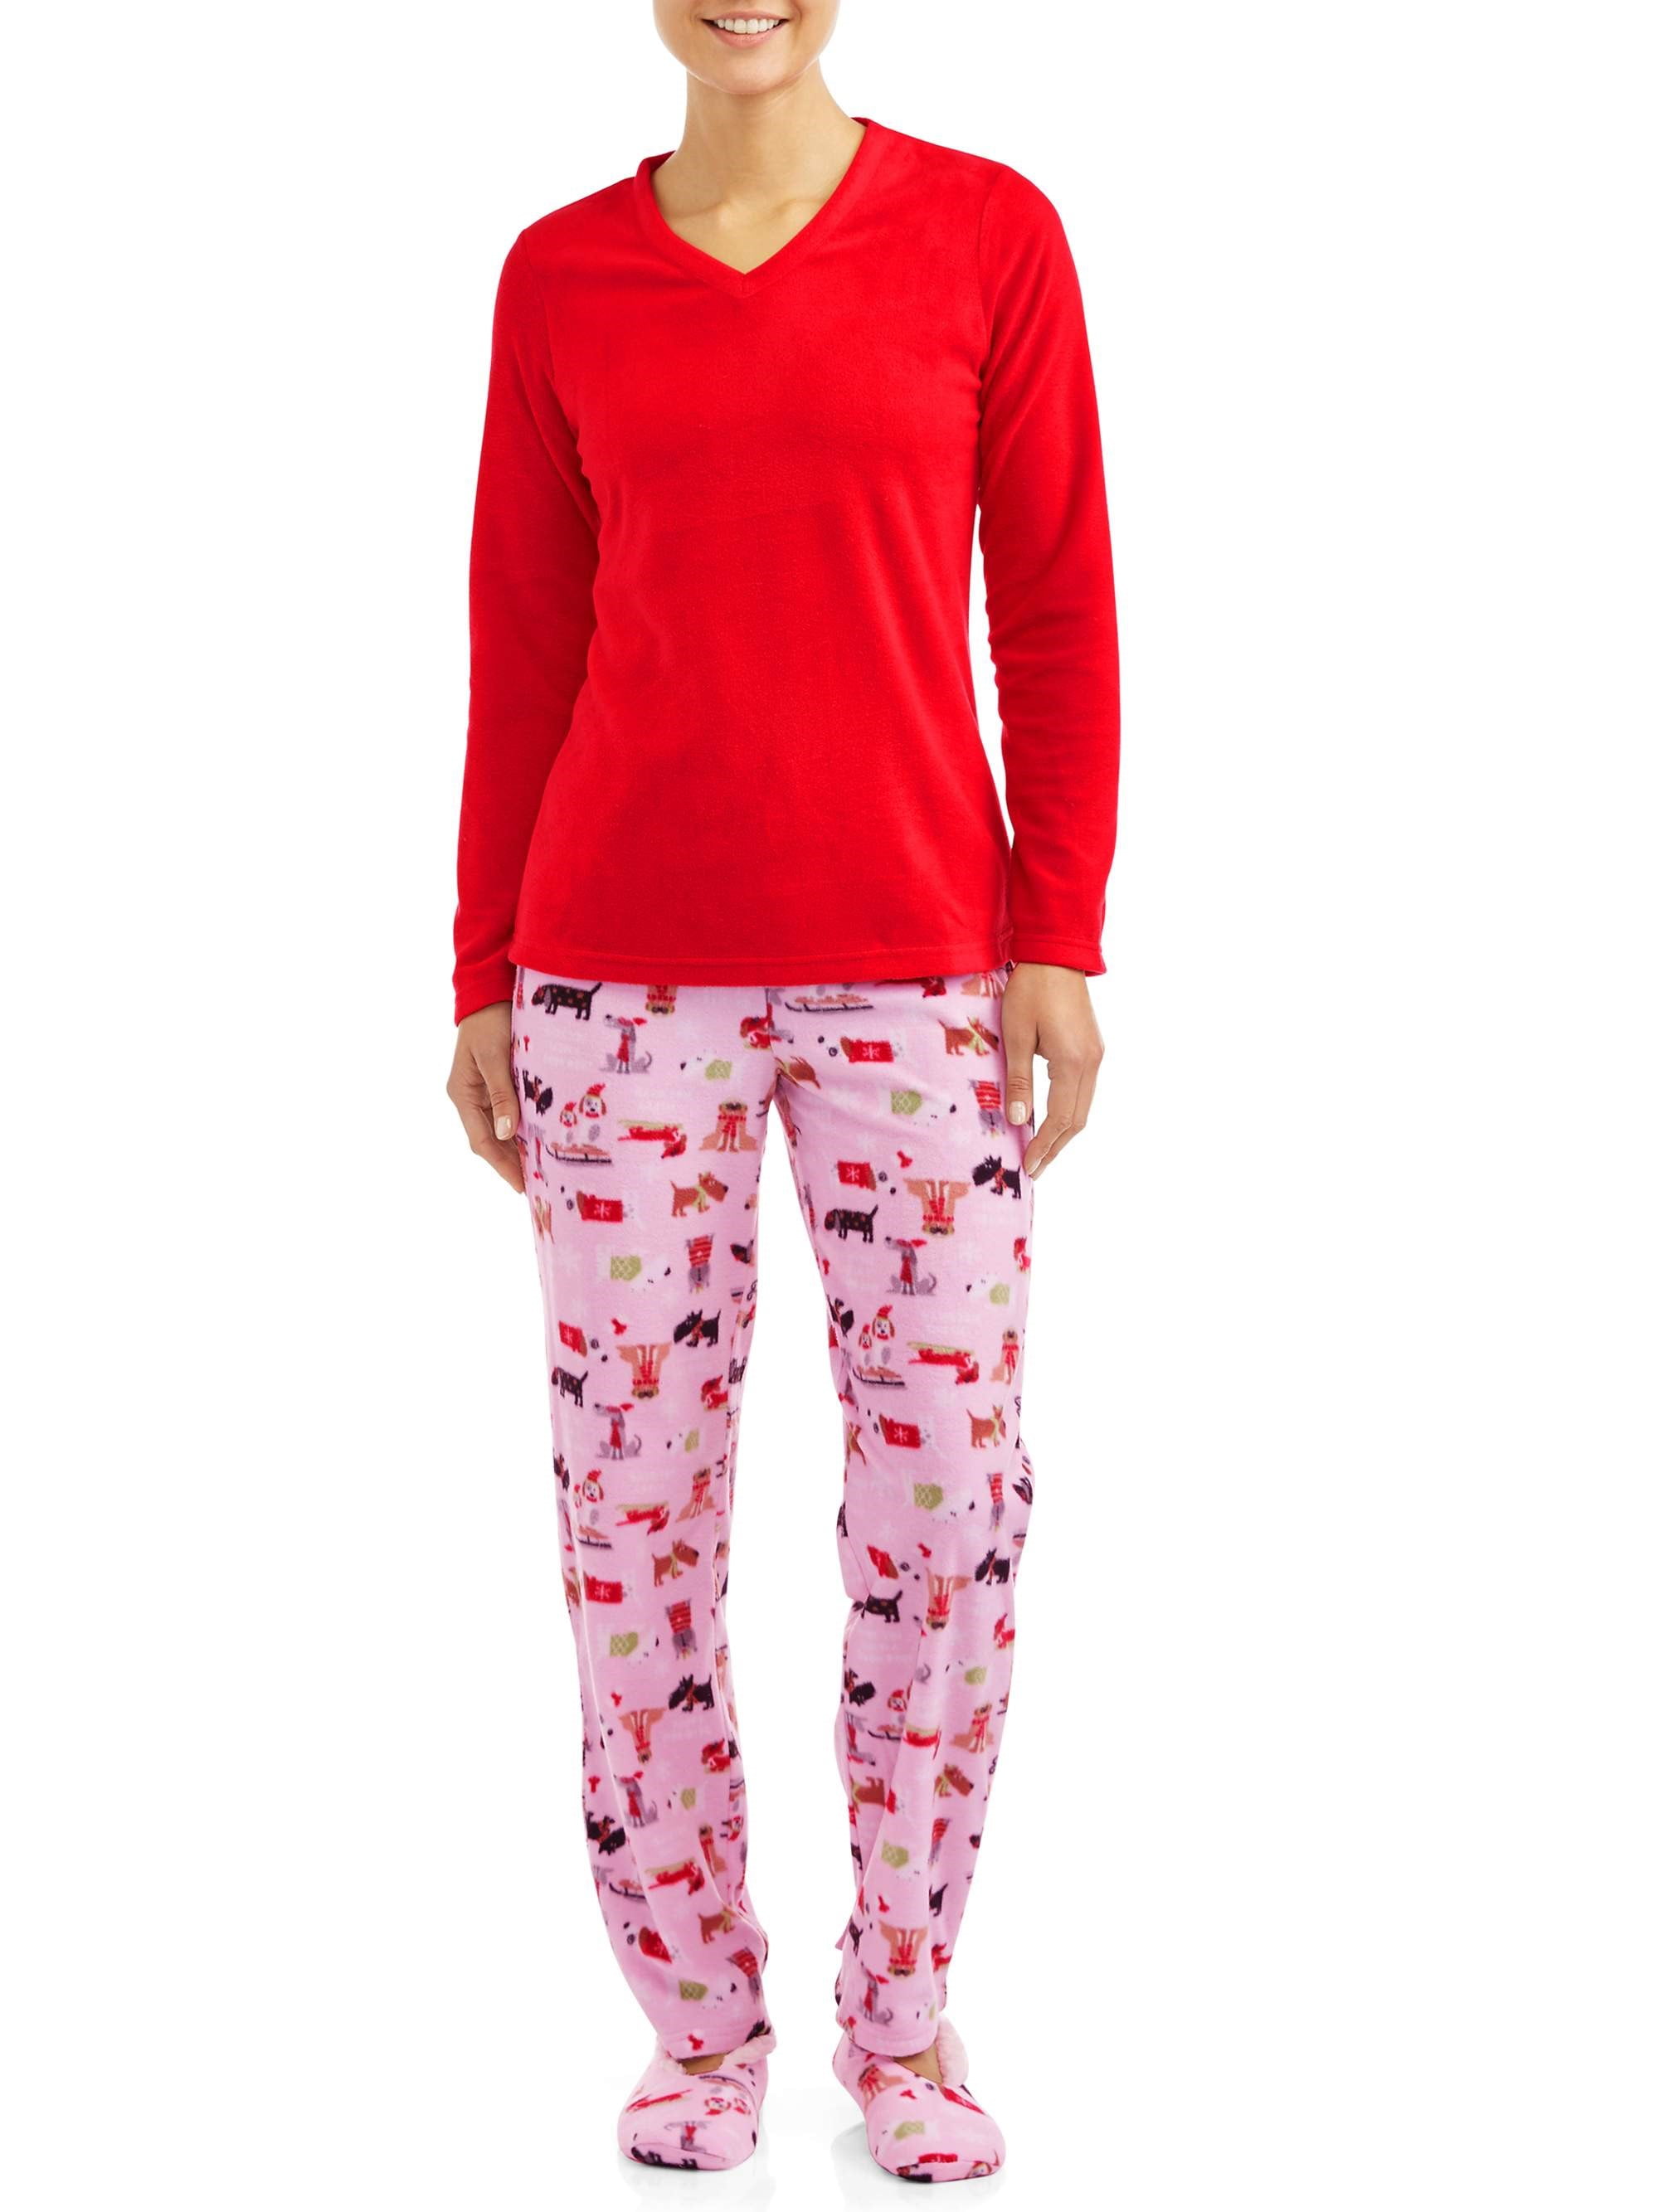 Hanes Women's 3-Piece Pajama Set Slippers - Walmart.com